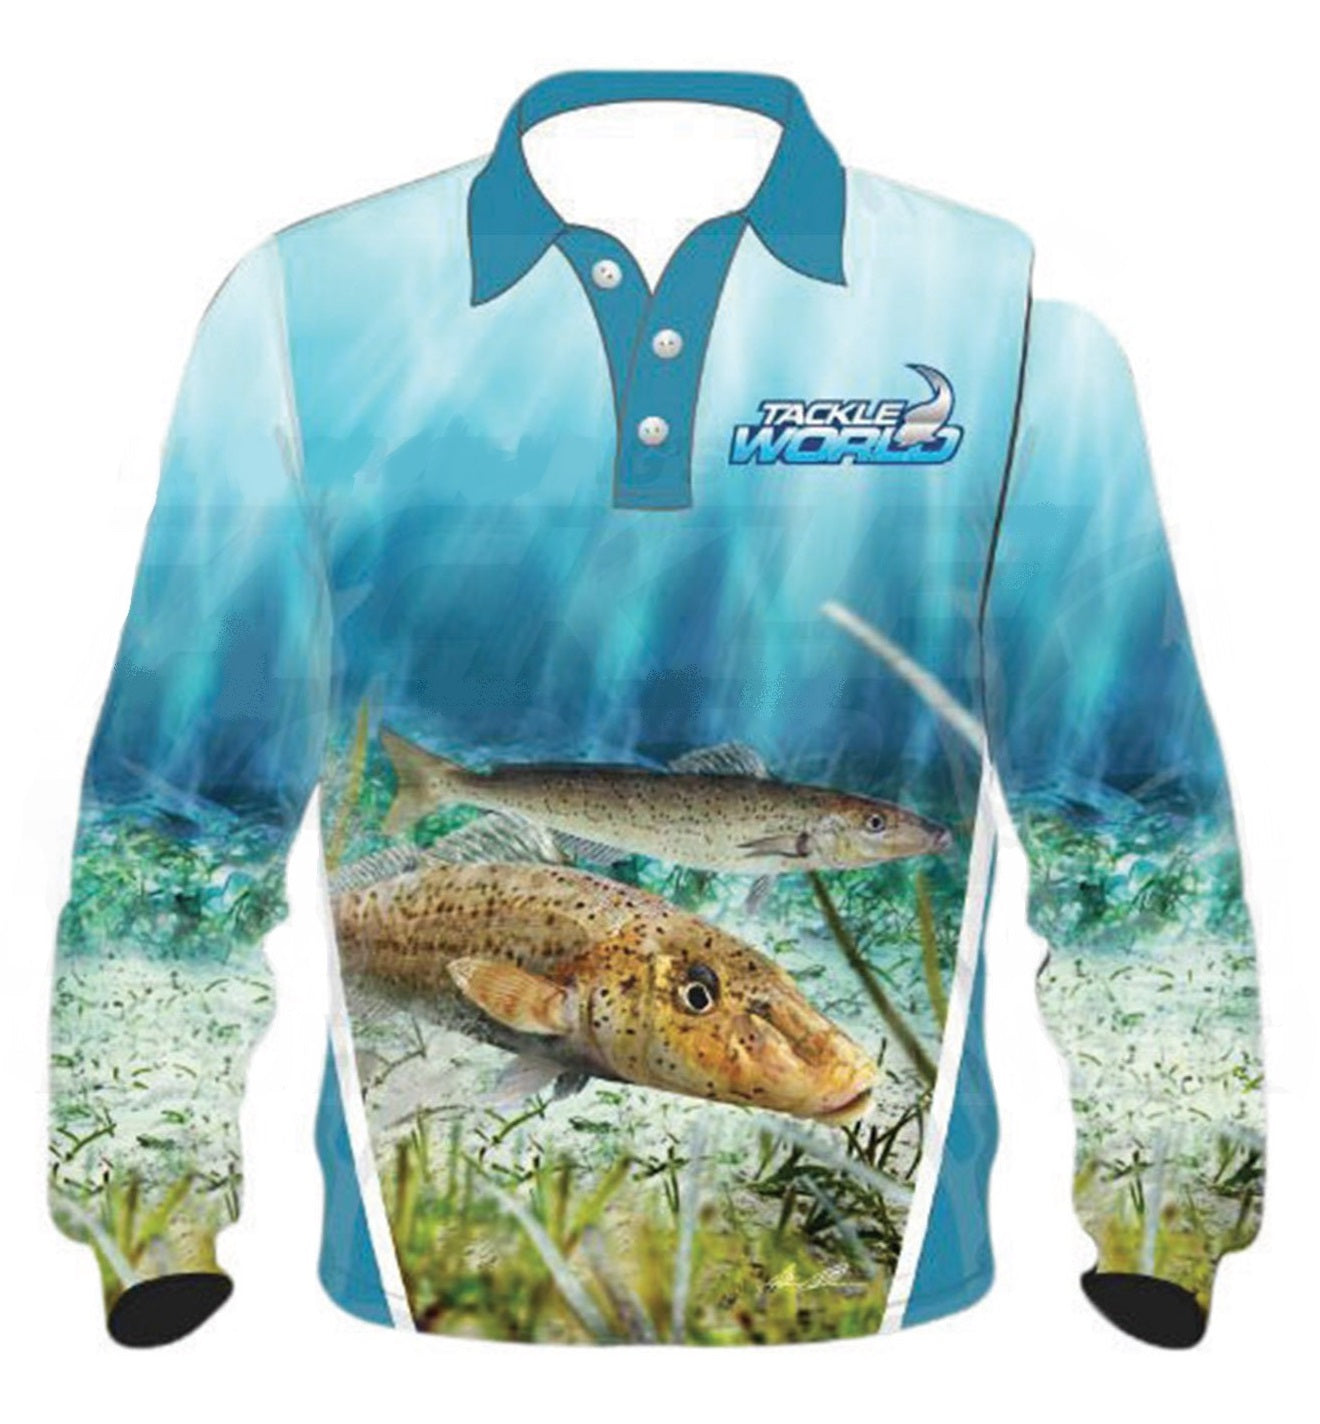 Tackle World Whiting Kids Long Sleeve Fishing Shirt Jersey